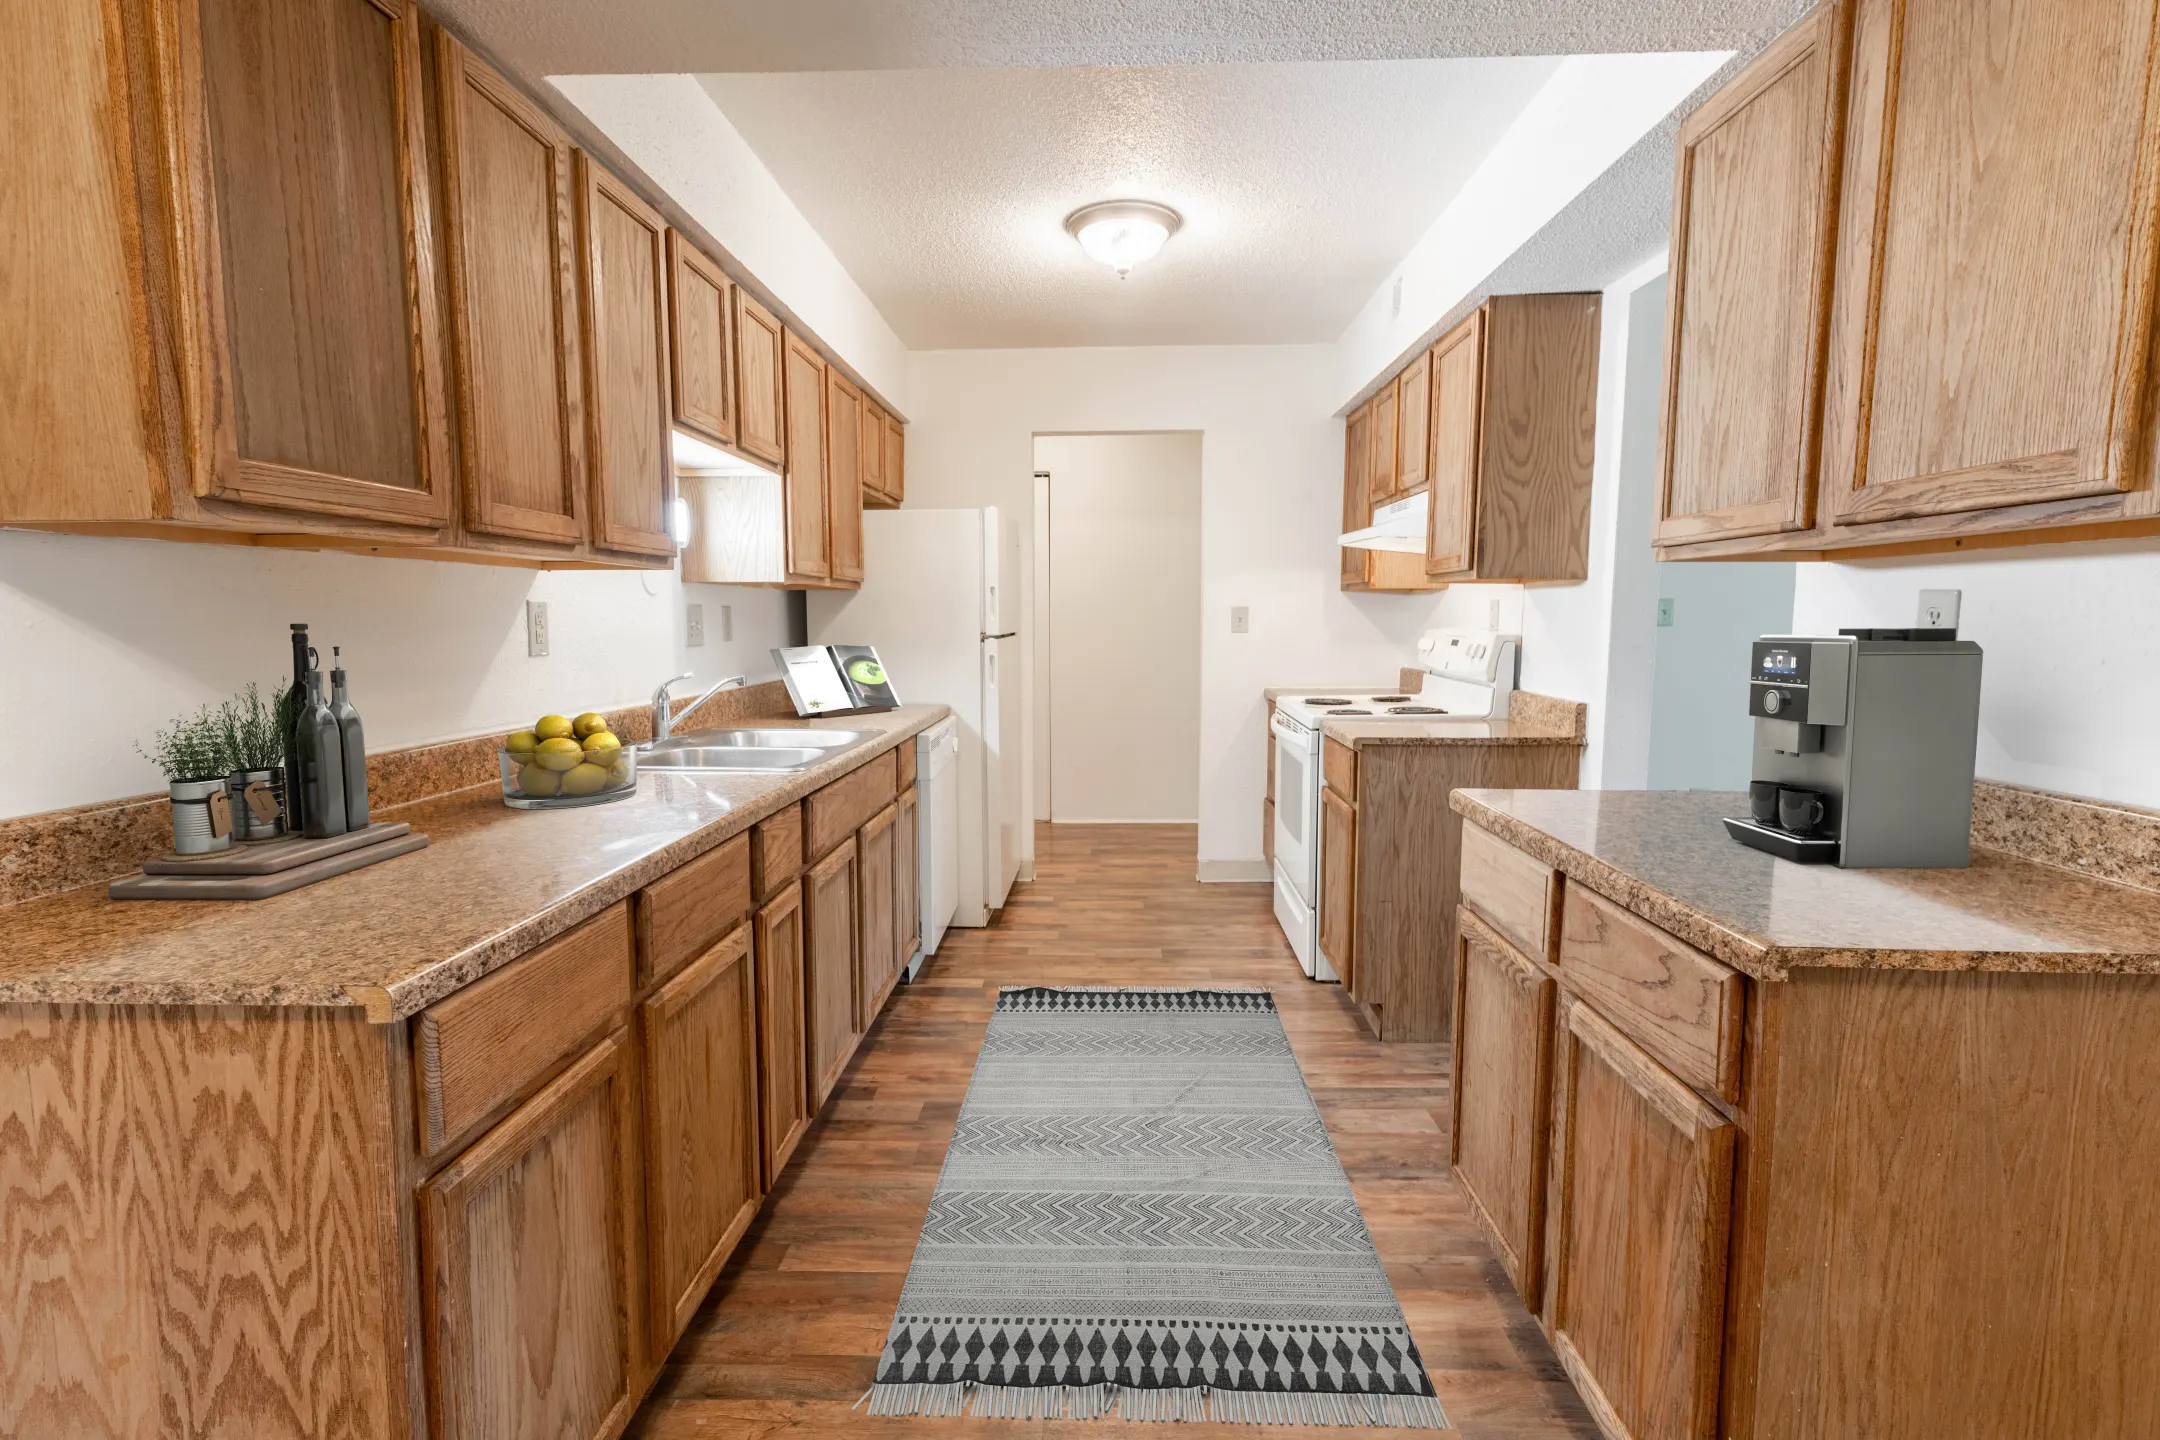 Kitchen - Candlewyck Apartments - Kalamazoo, MI